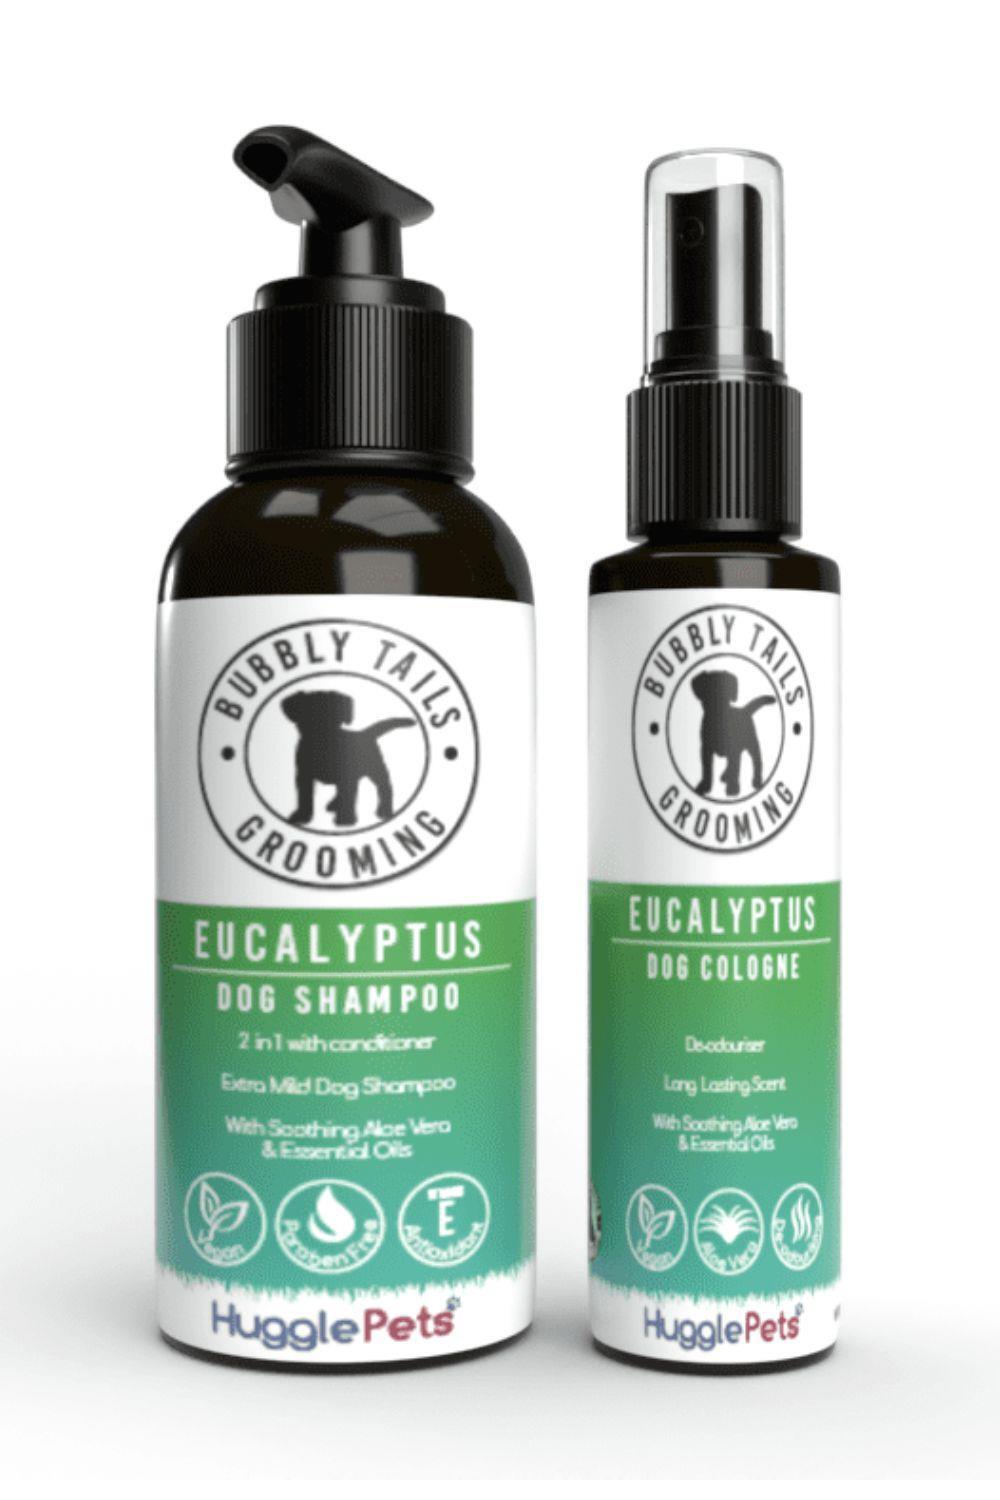 HugglePets Bubbly Tails Eucalyptus 2 in 1 Dog Shampoo & Deodorising Cologne Set 1/1